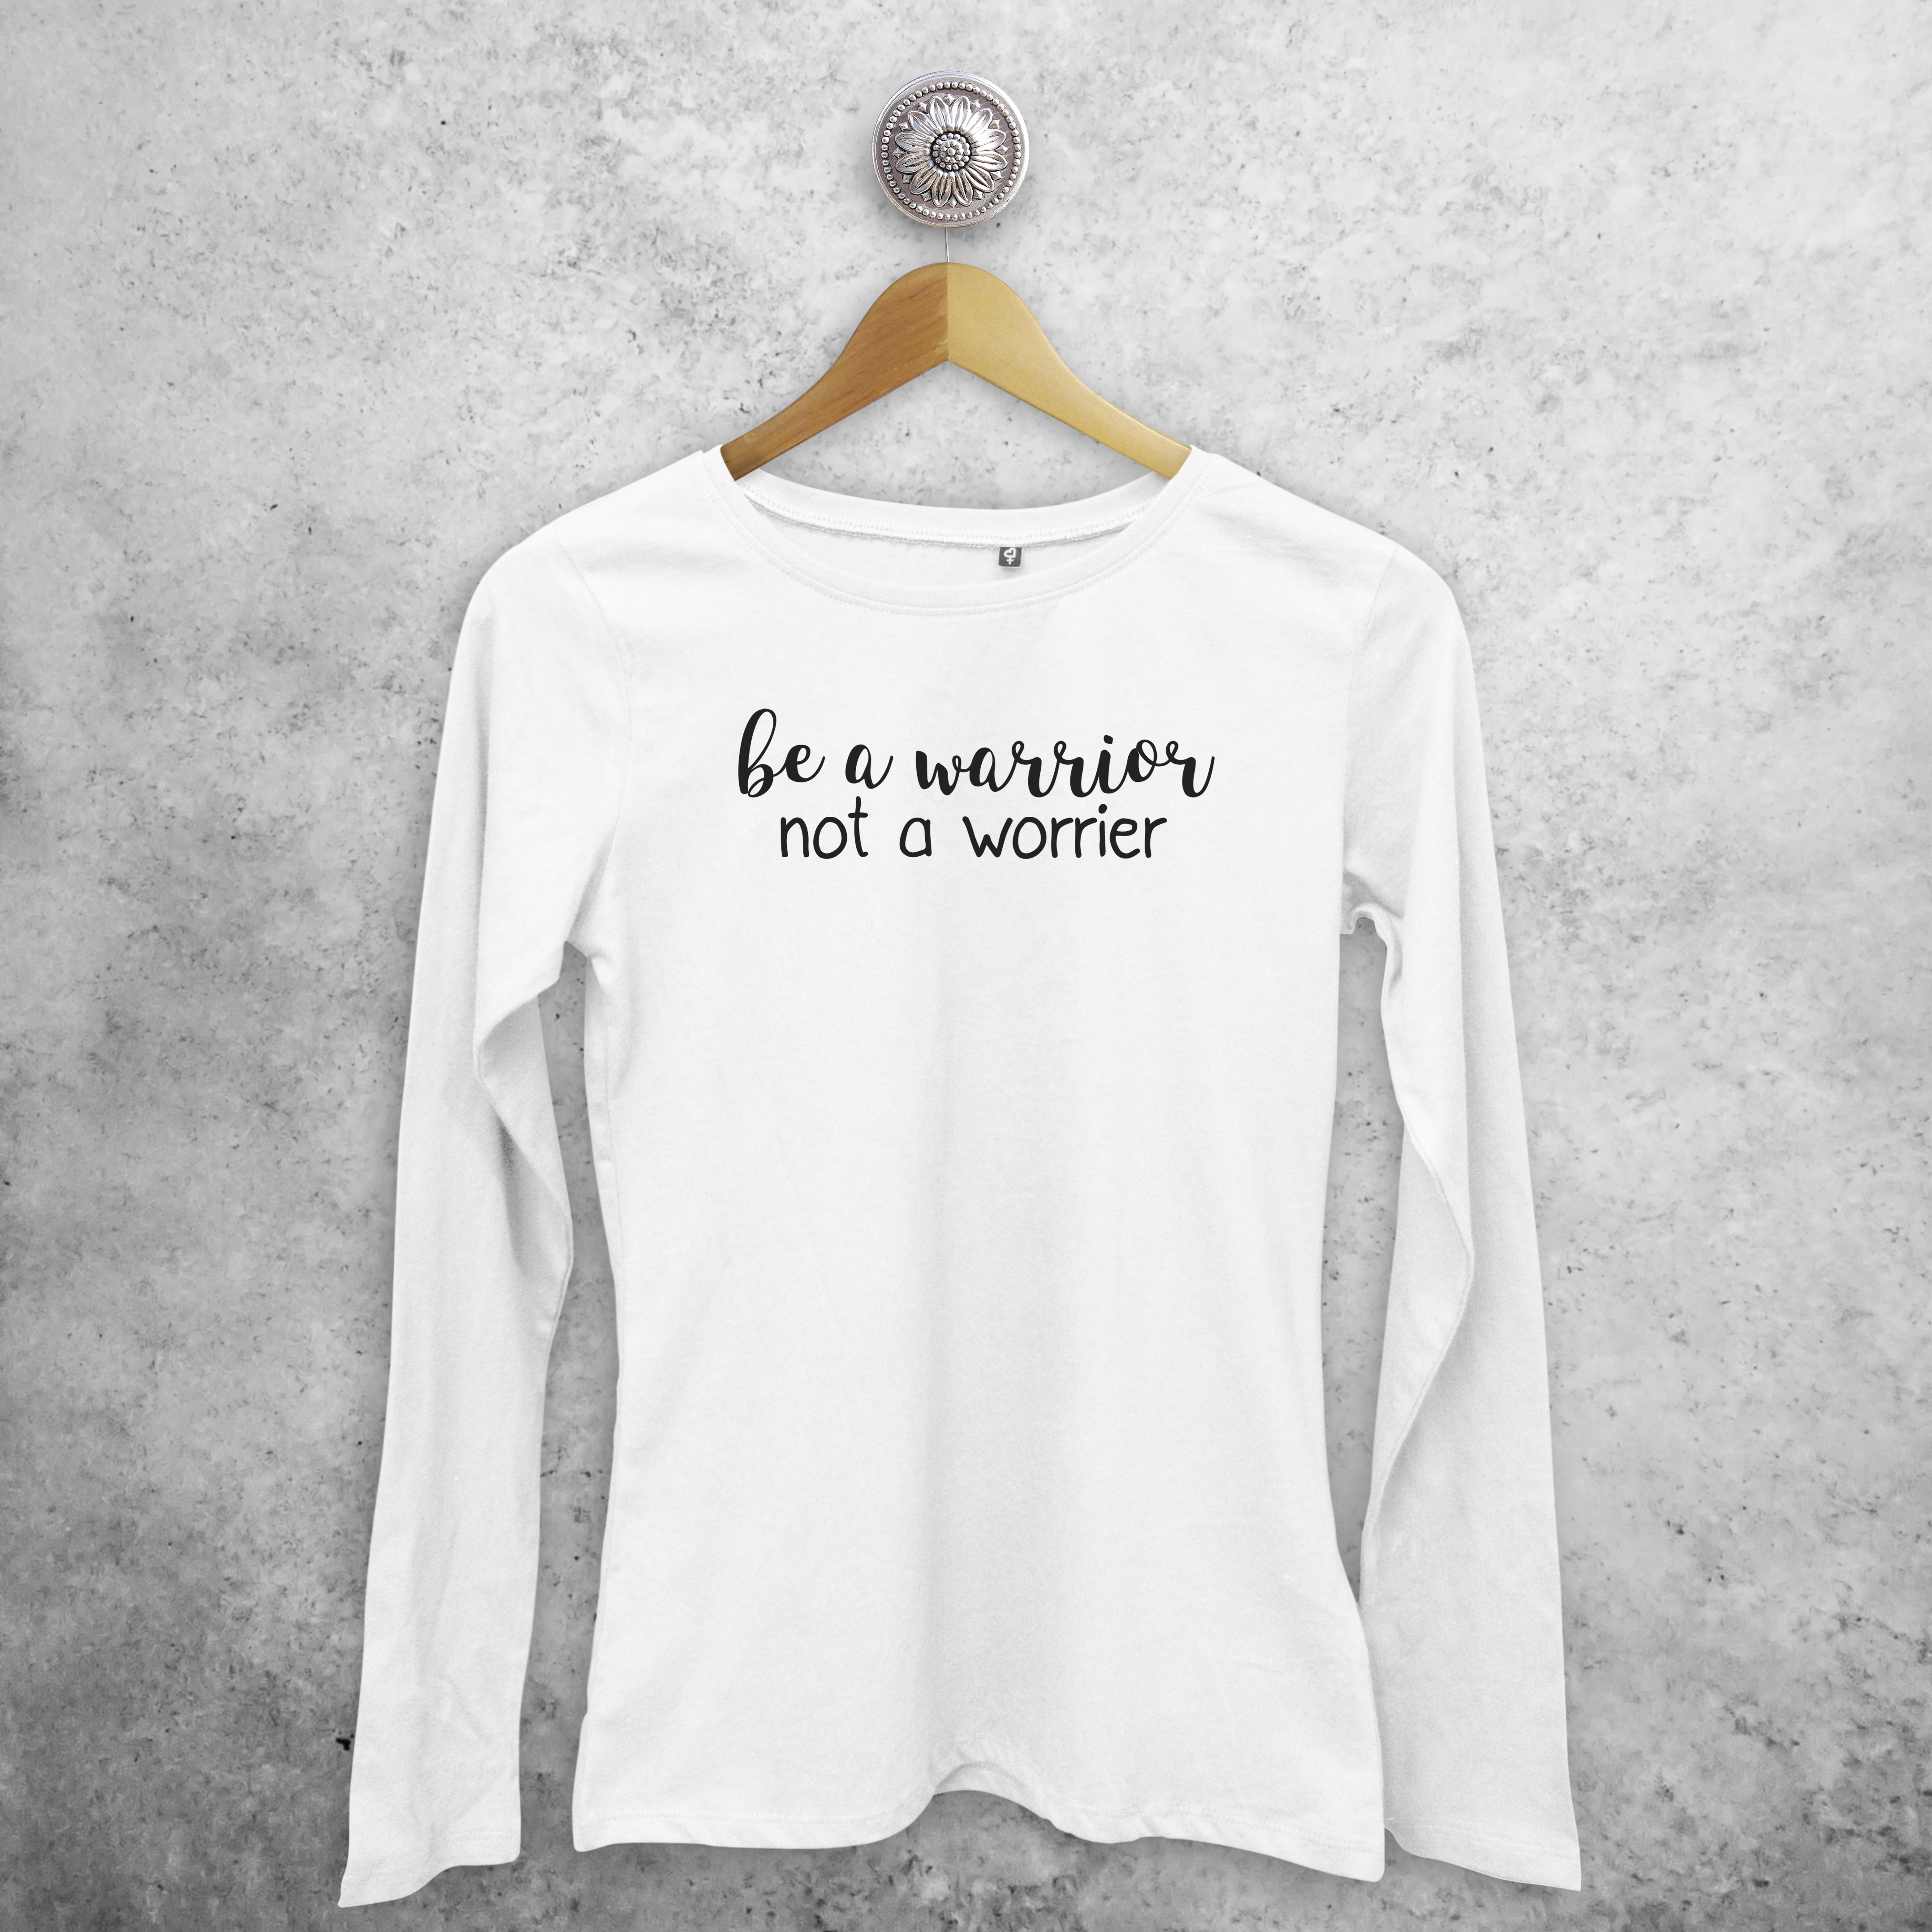 'Be a warrior, not a worrier' volwassene shirt met lange mouwen